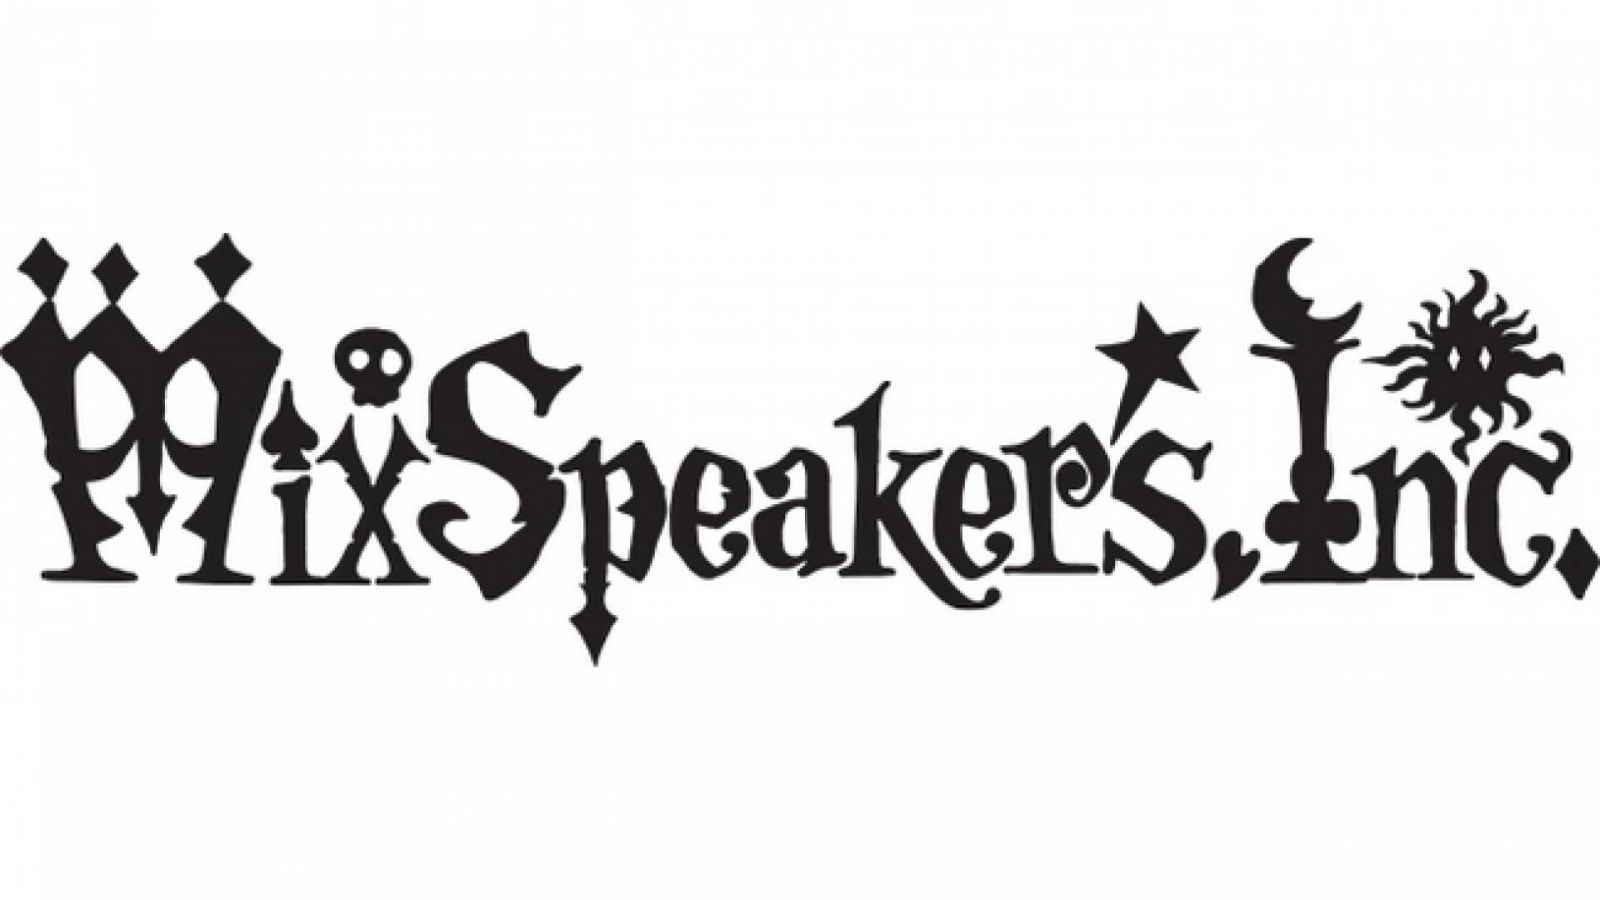 Mix Speaker's,Inc. ganha novo membro © Mix Speaker's, Inc.